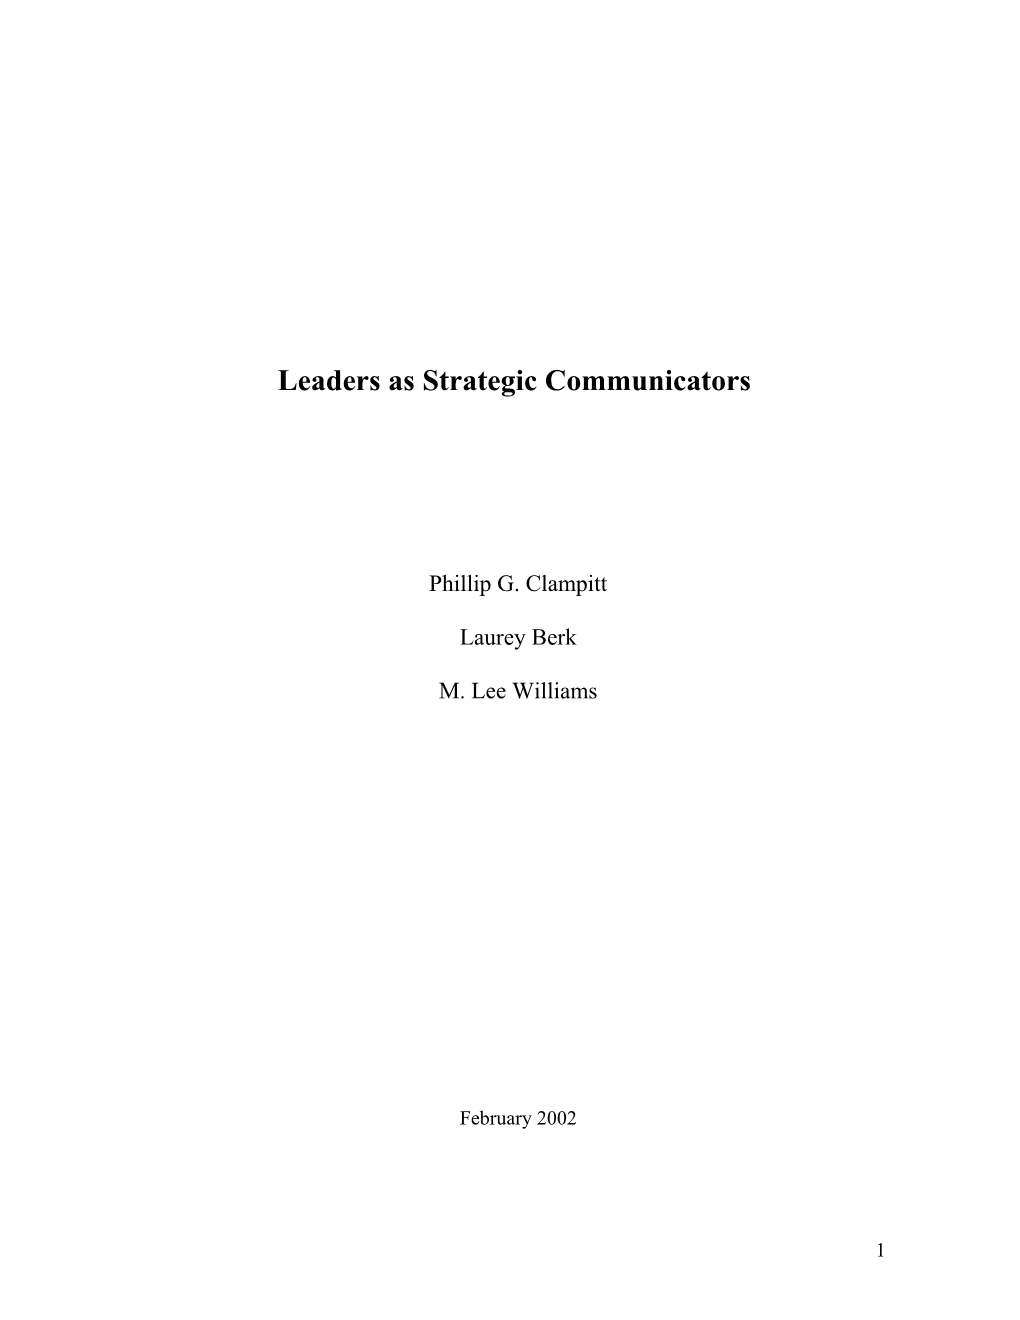 Leaders As Communicators